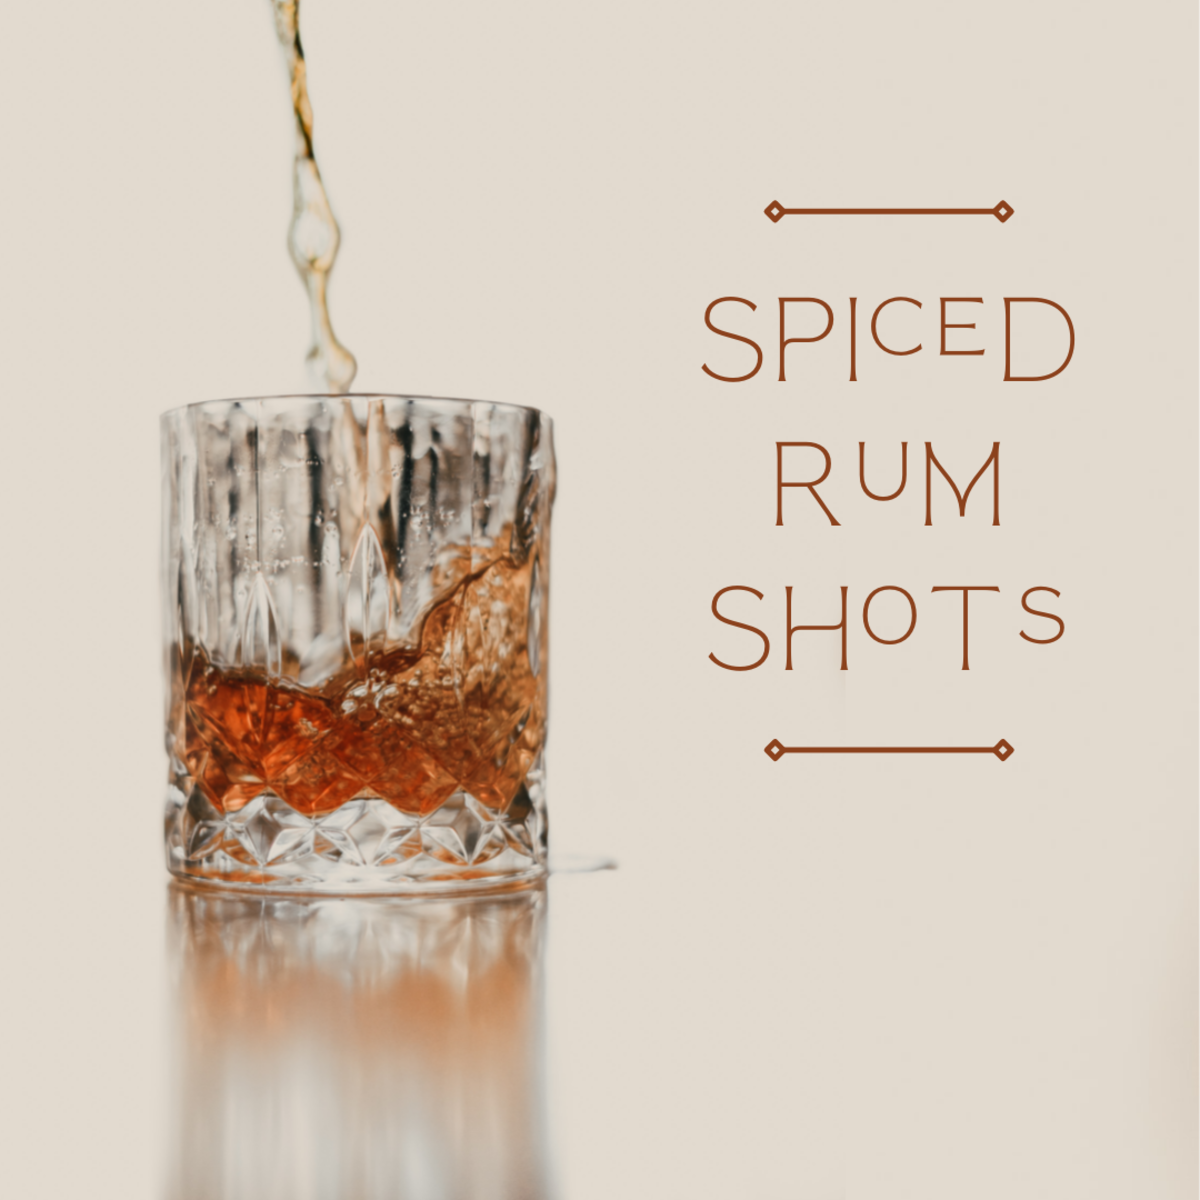 25 Amazing Captain Morgan Spiced Rum Shots